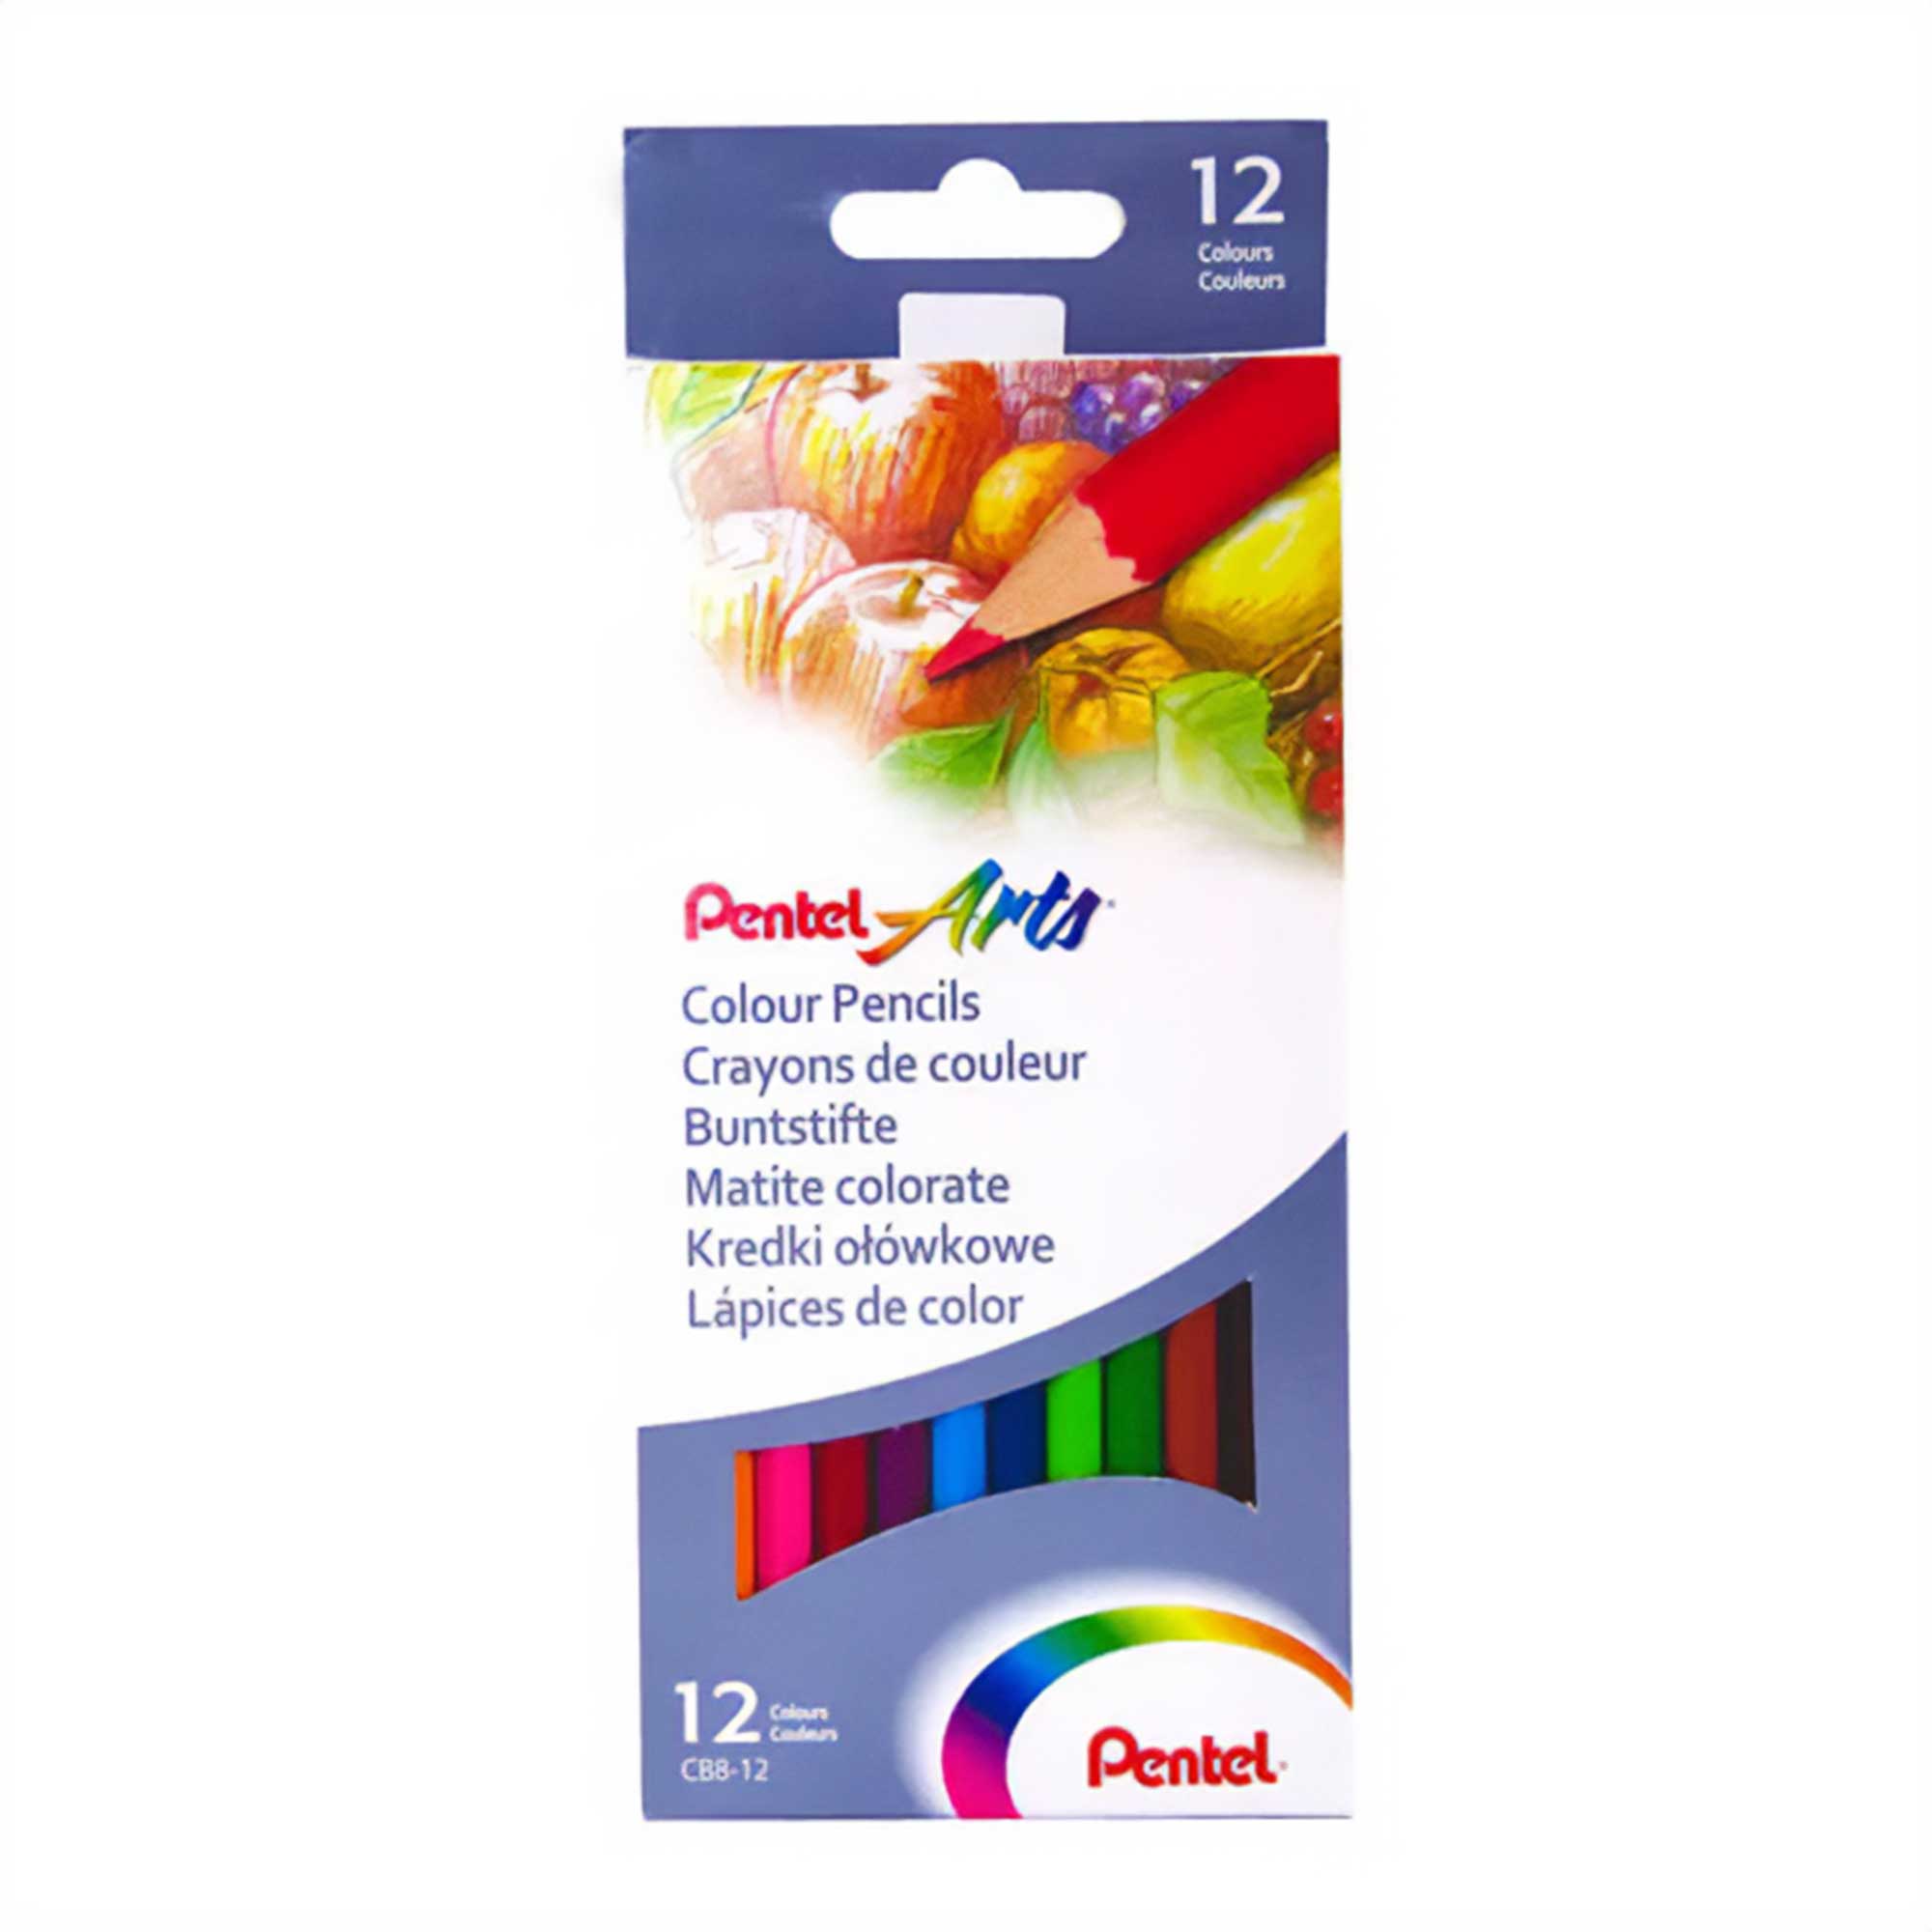 Pentel Arts Colour Pencils - Set of 12